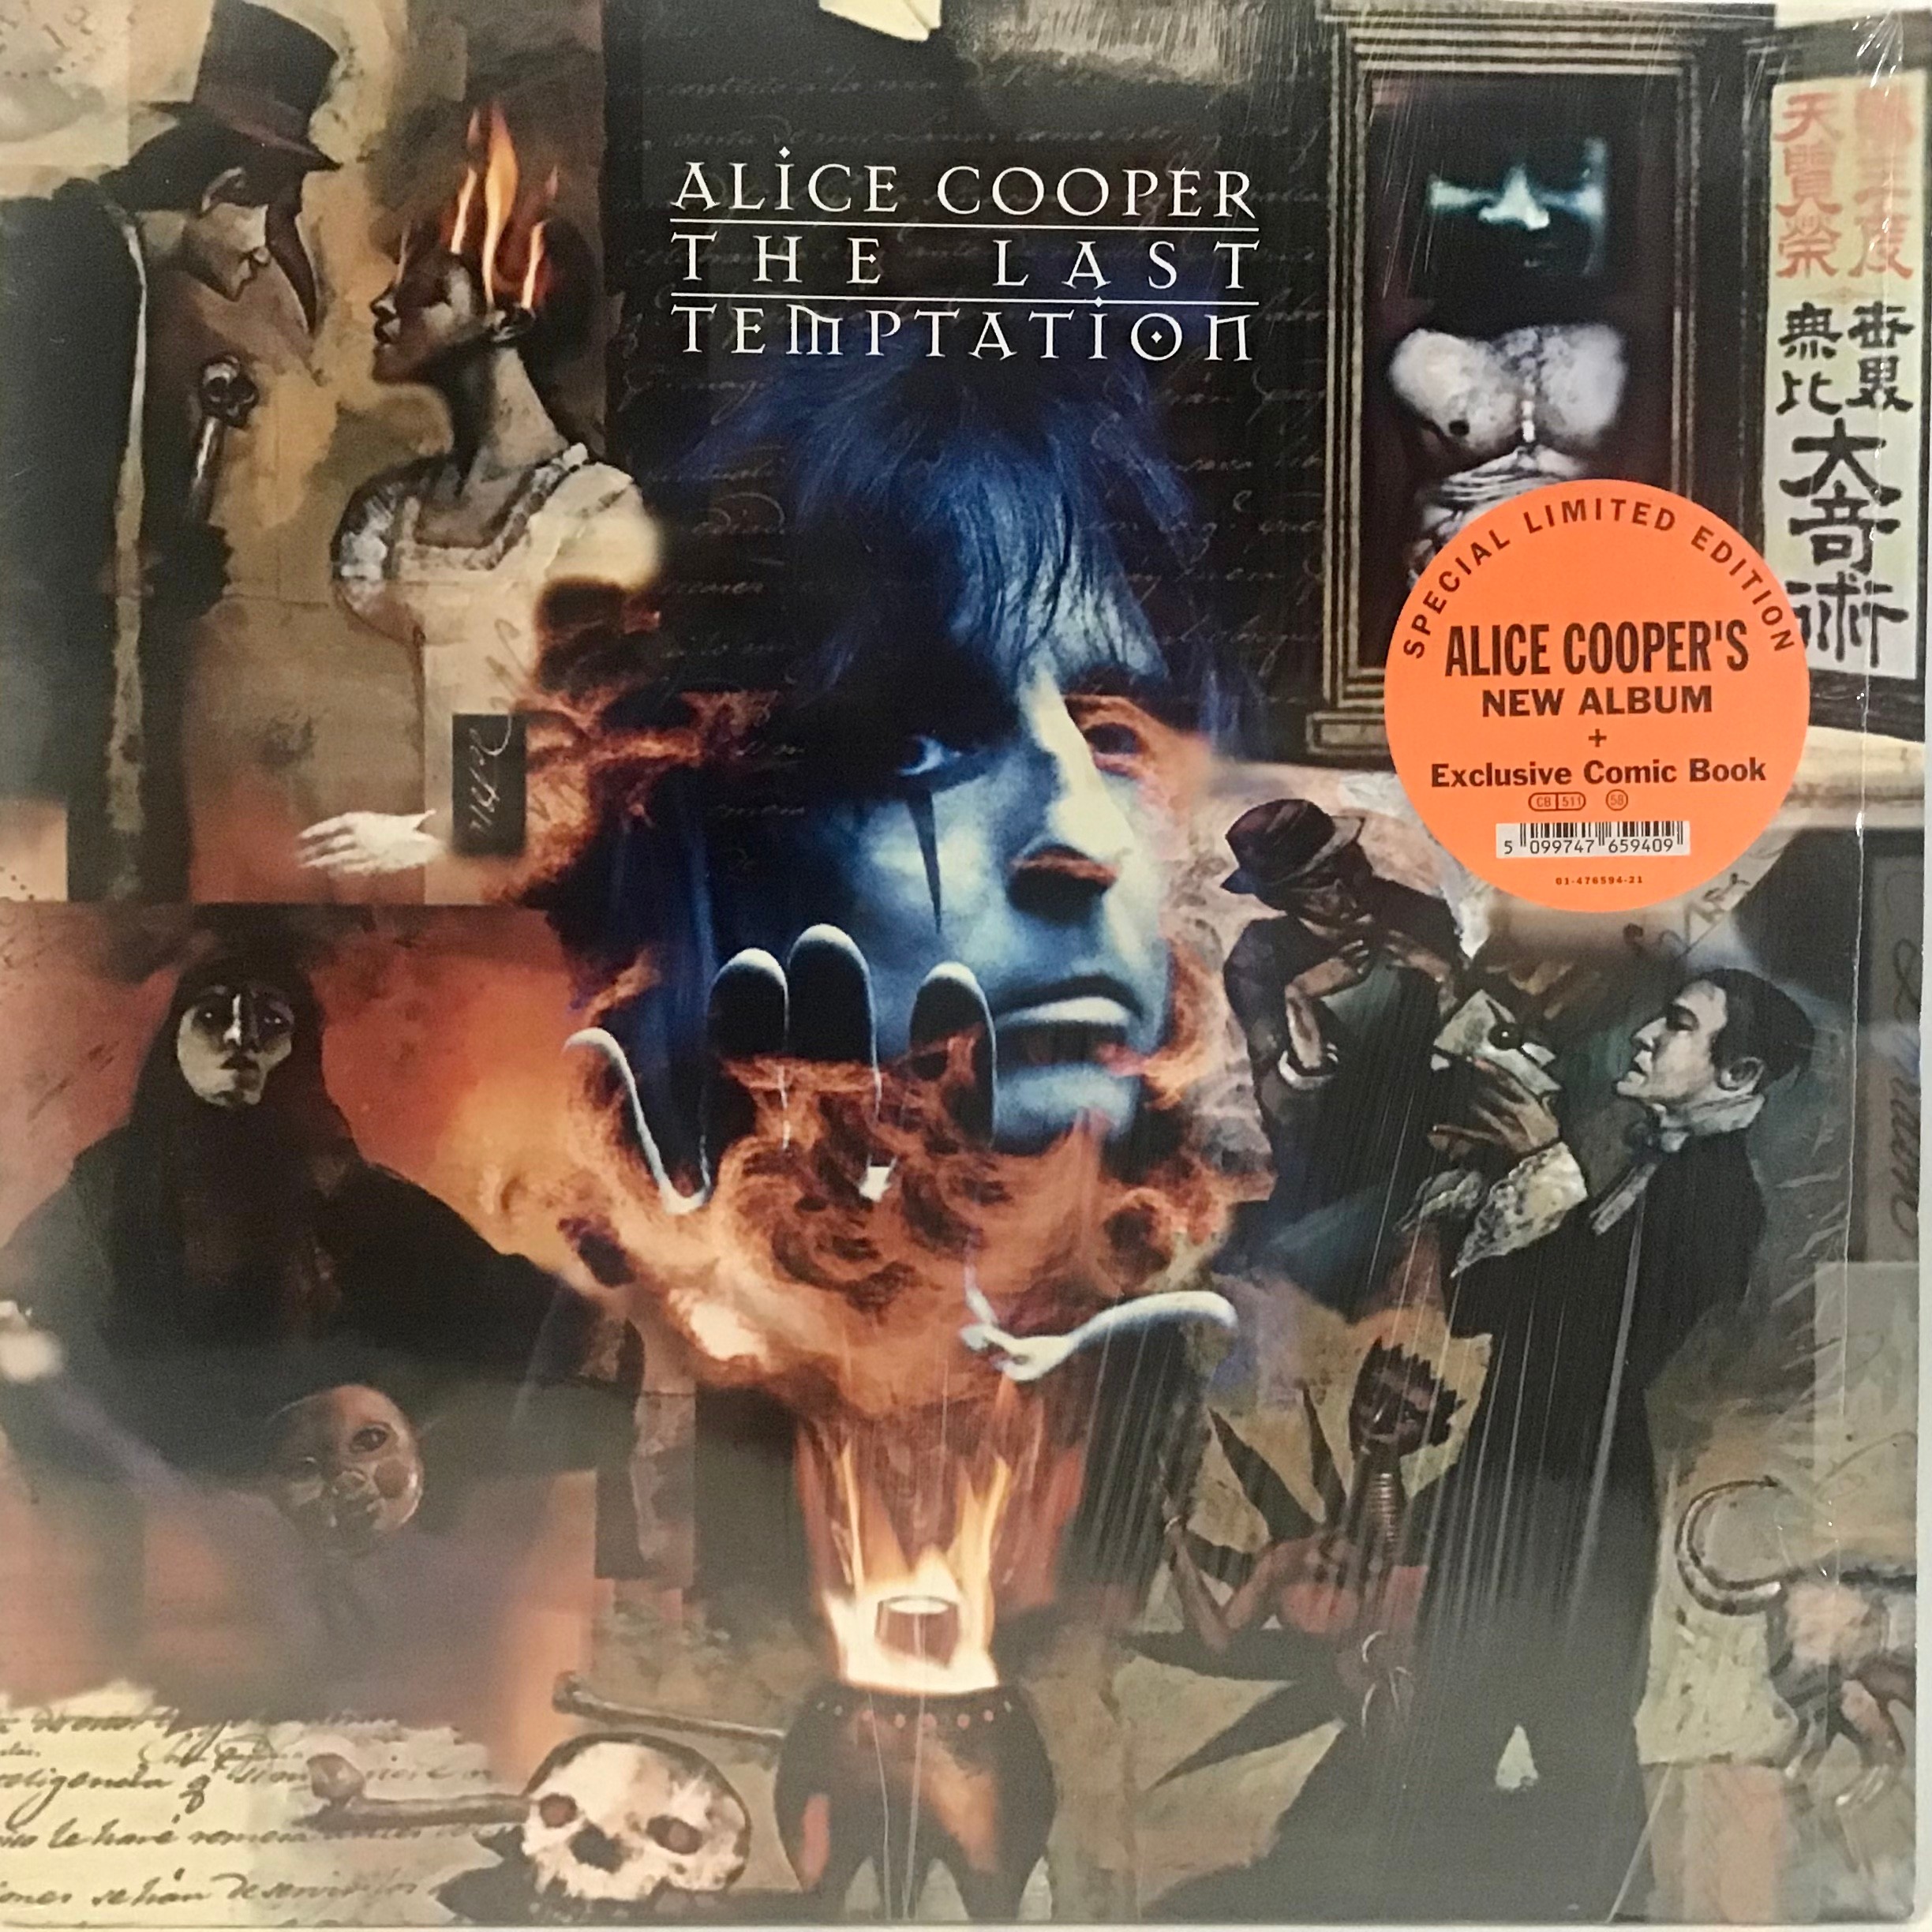 ALICE COOPER 'THE LAST TEMPTATION' BRAND NEW VINYL LP + COMIC BOOK. This is an unplayed album on